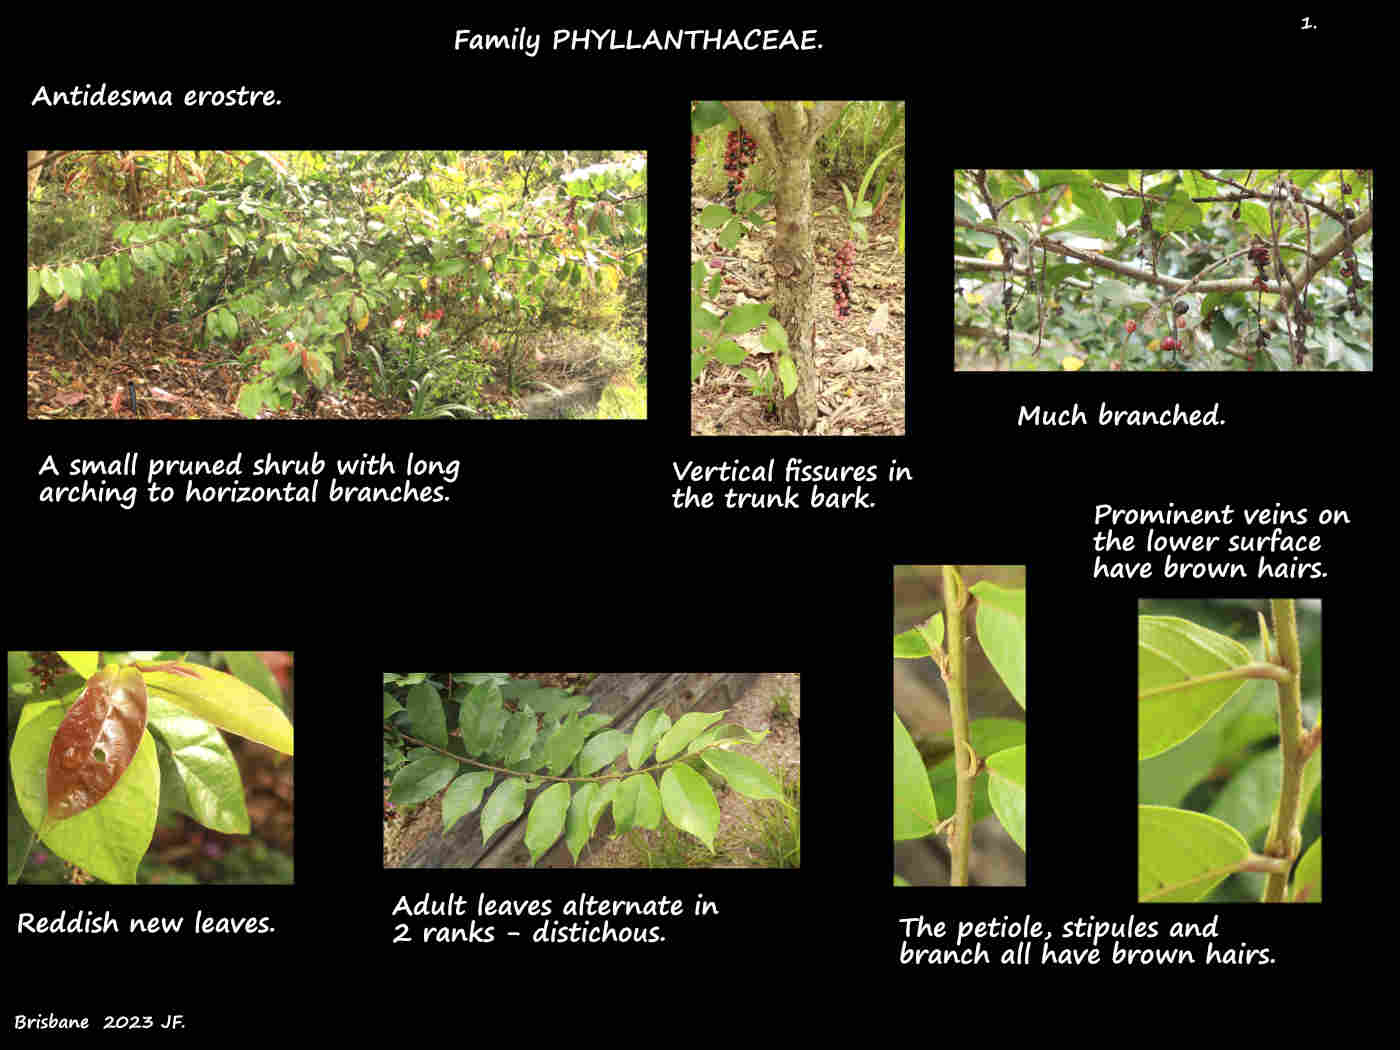 1 Antidesma erostre shrub & leaves